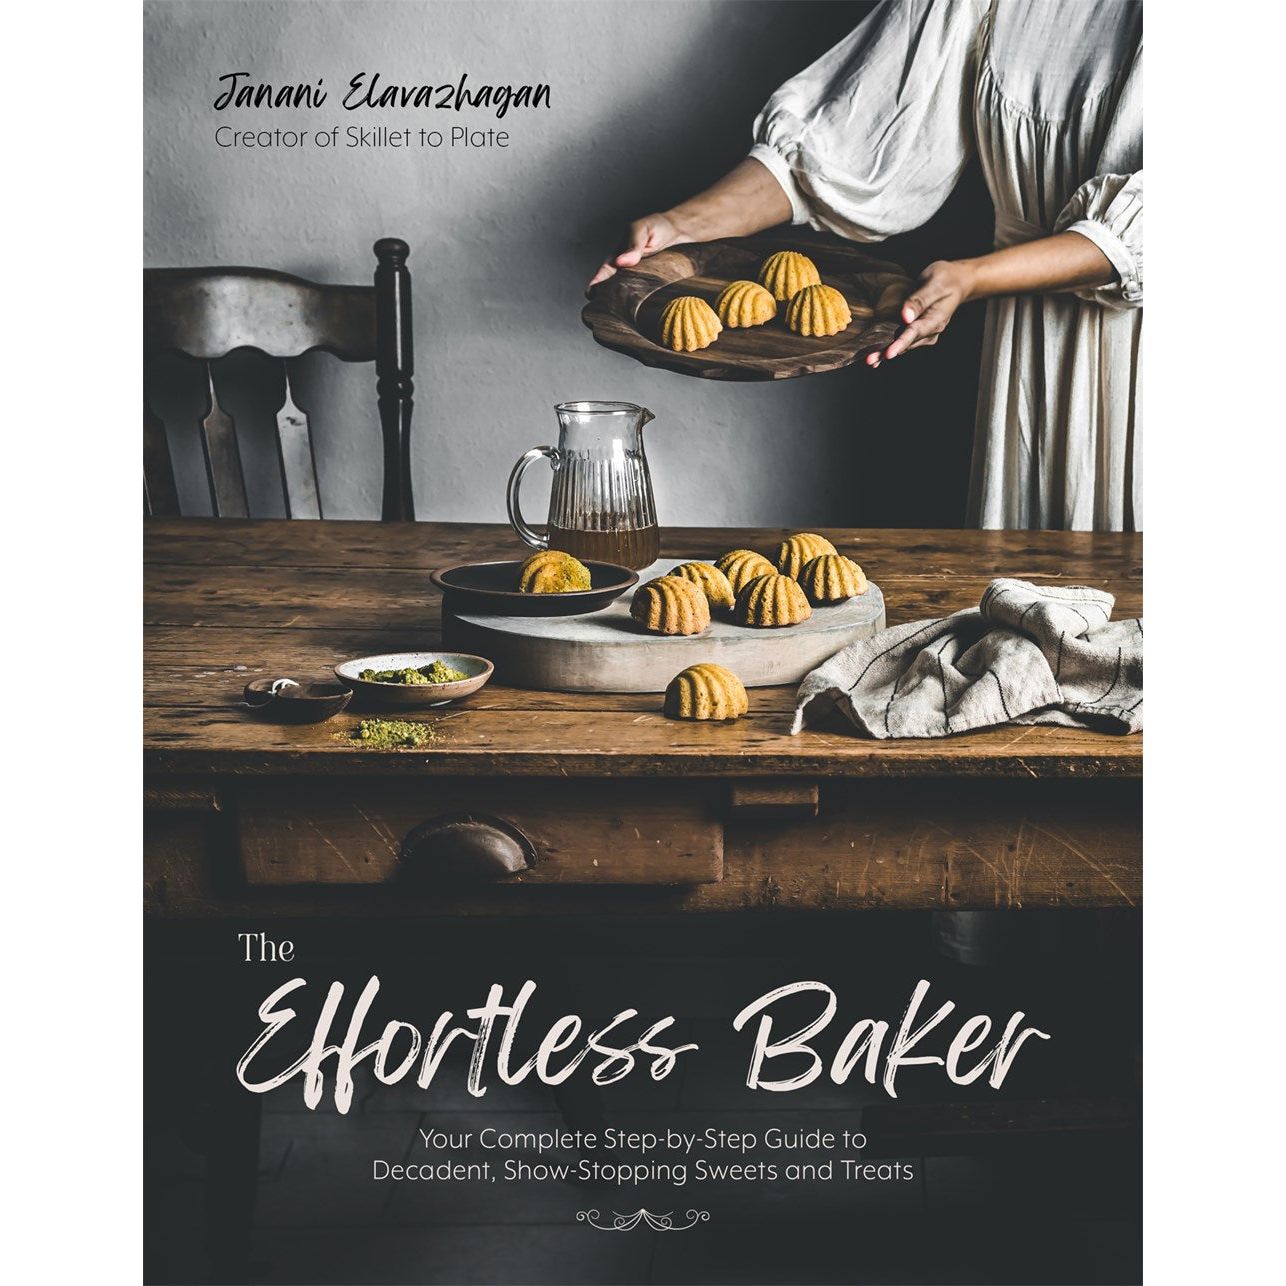 The Effortless Baker (Janani Elavazhagan)